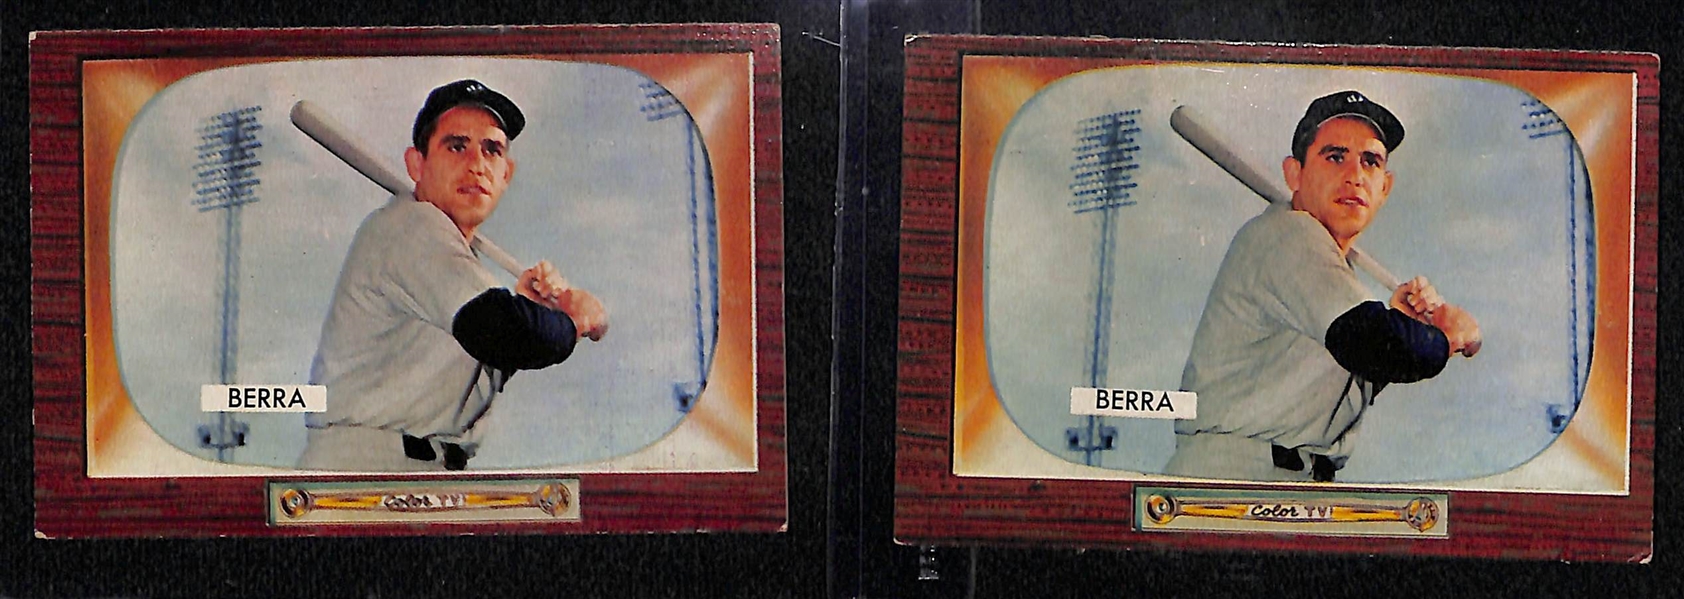 Lot of (3) Vintage Hank Aaron Cards & (5) Vintage Yogi Berra Cards w. 1955 Bowman Hank Aaron